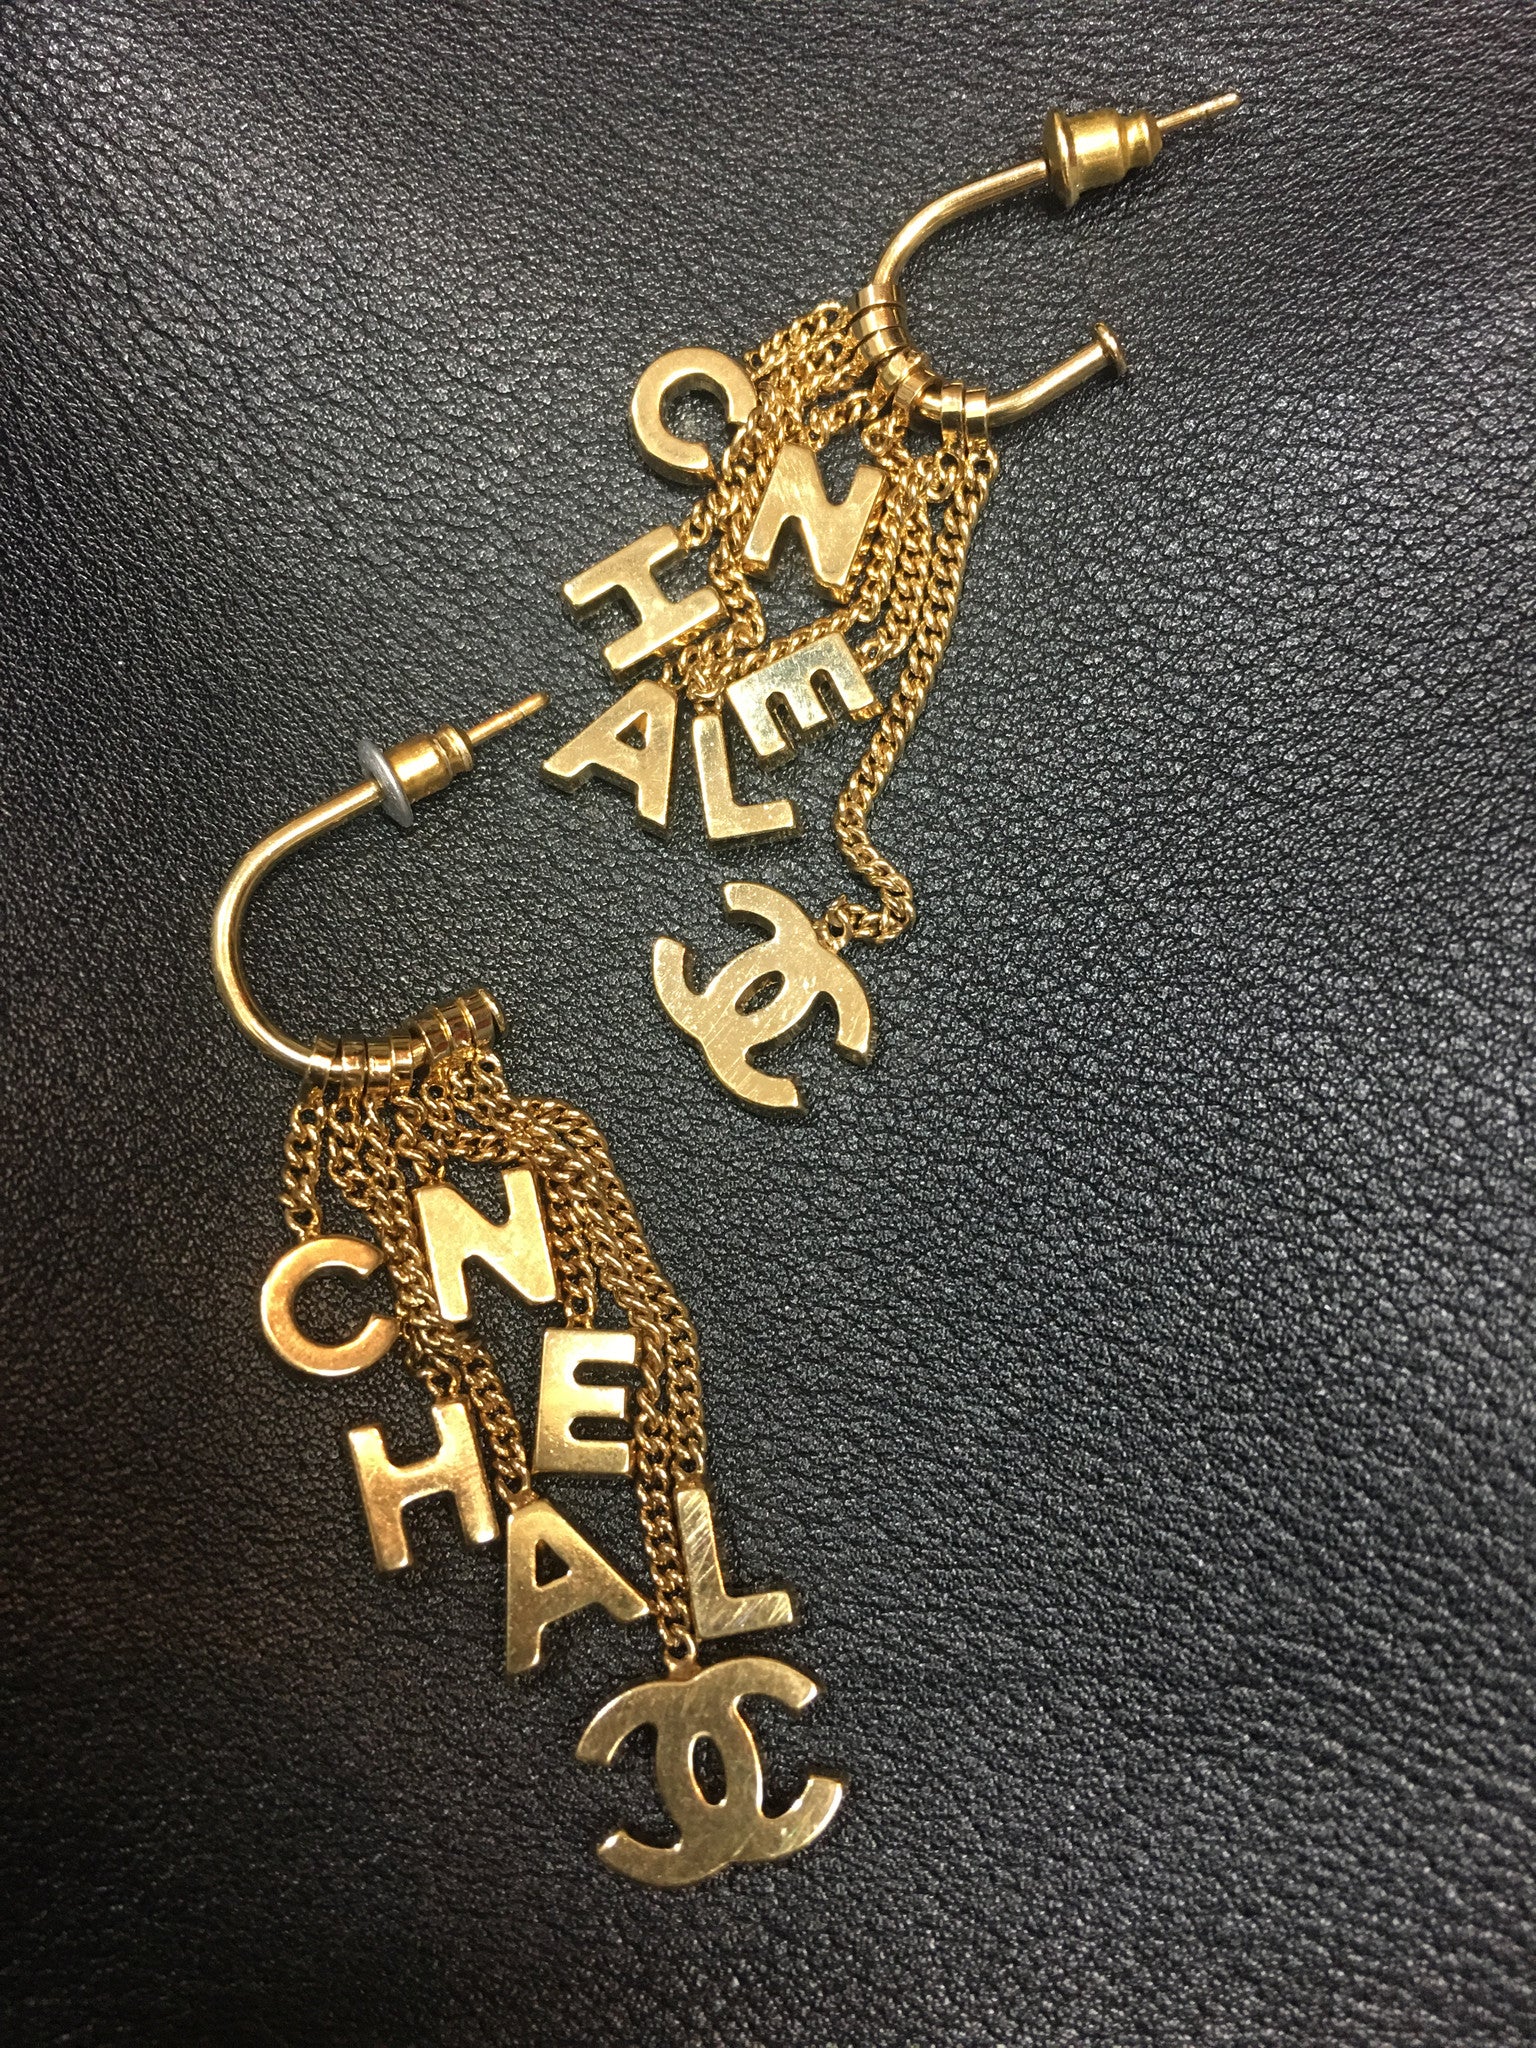 *RARE* CHANEL "Letters" Earrings